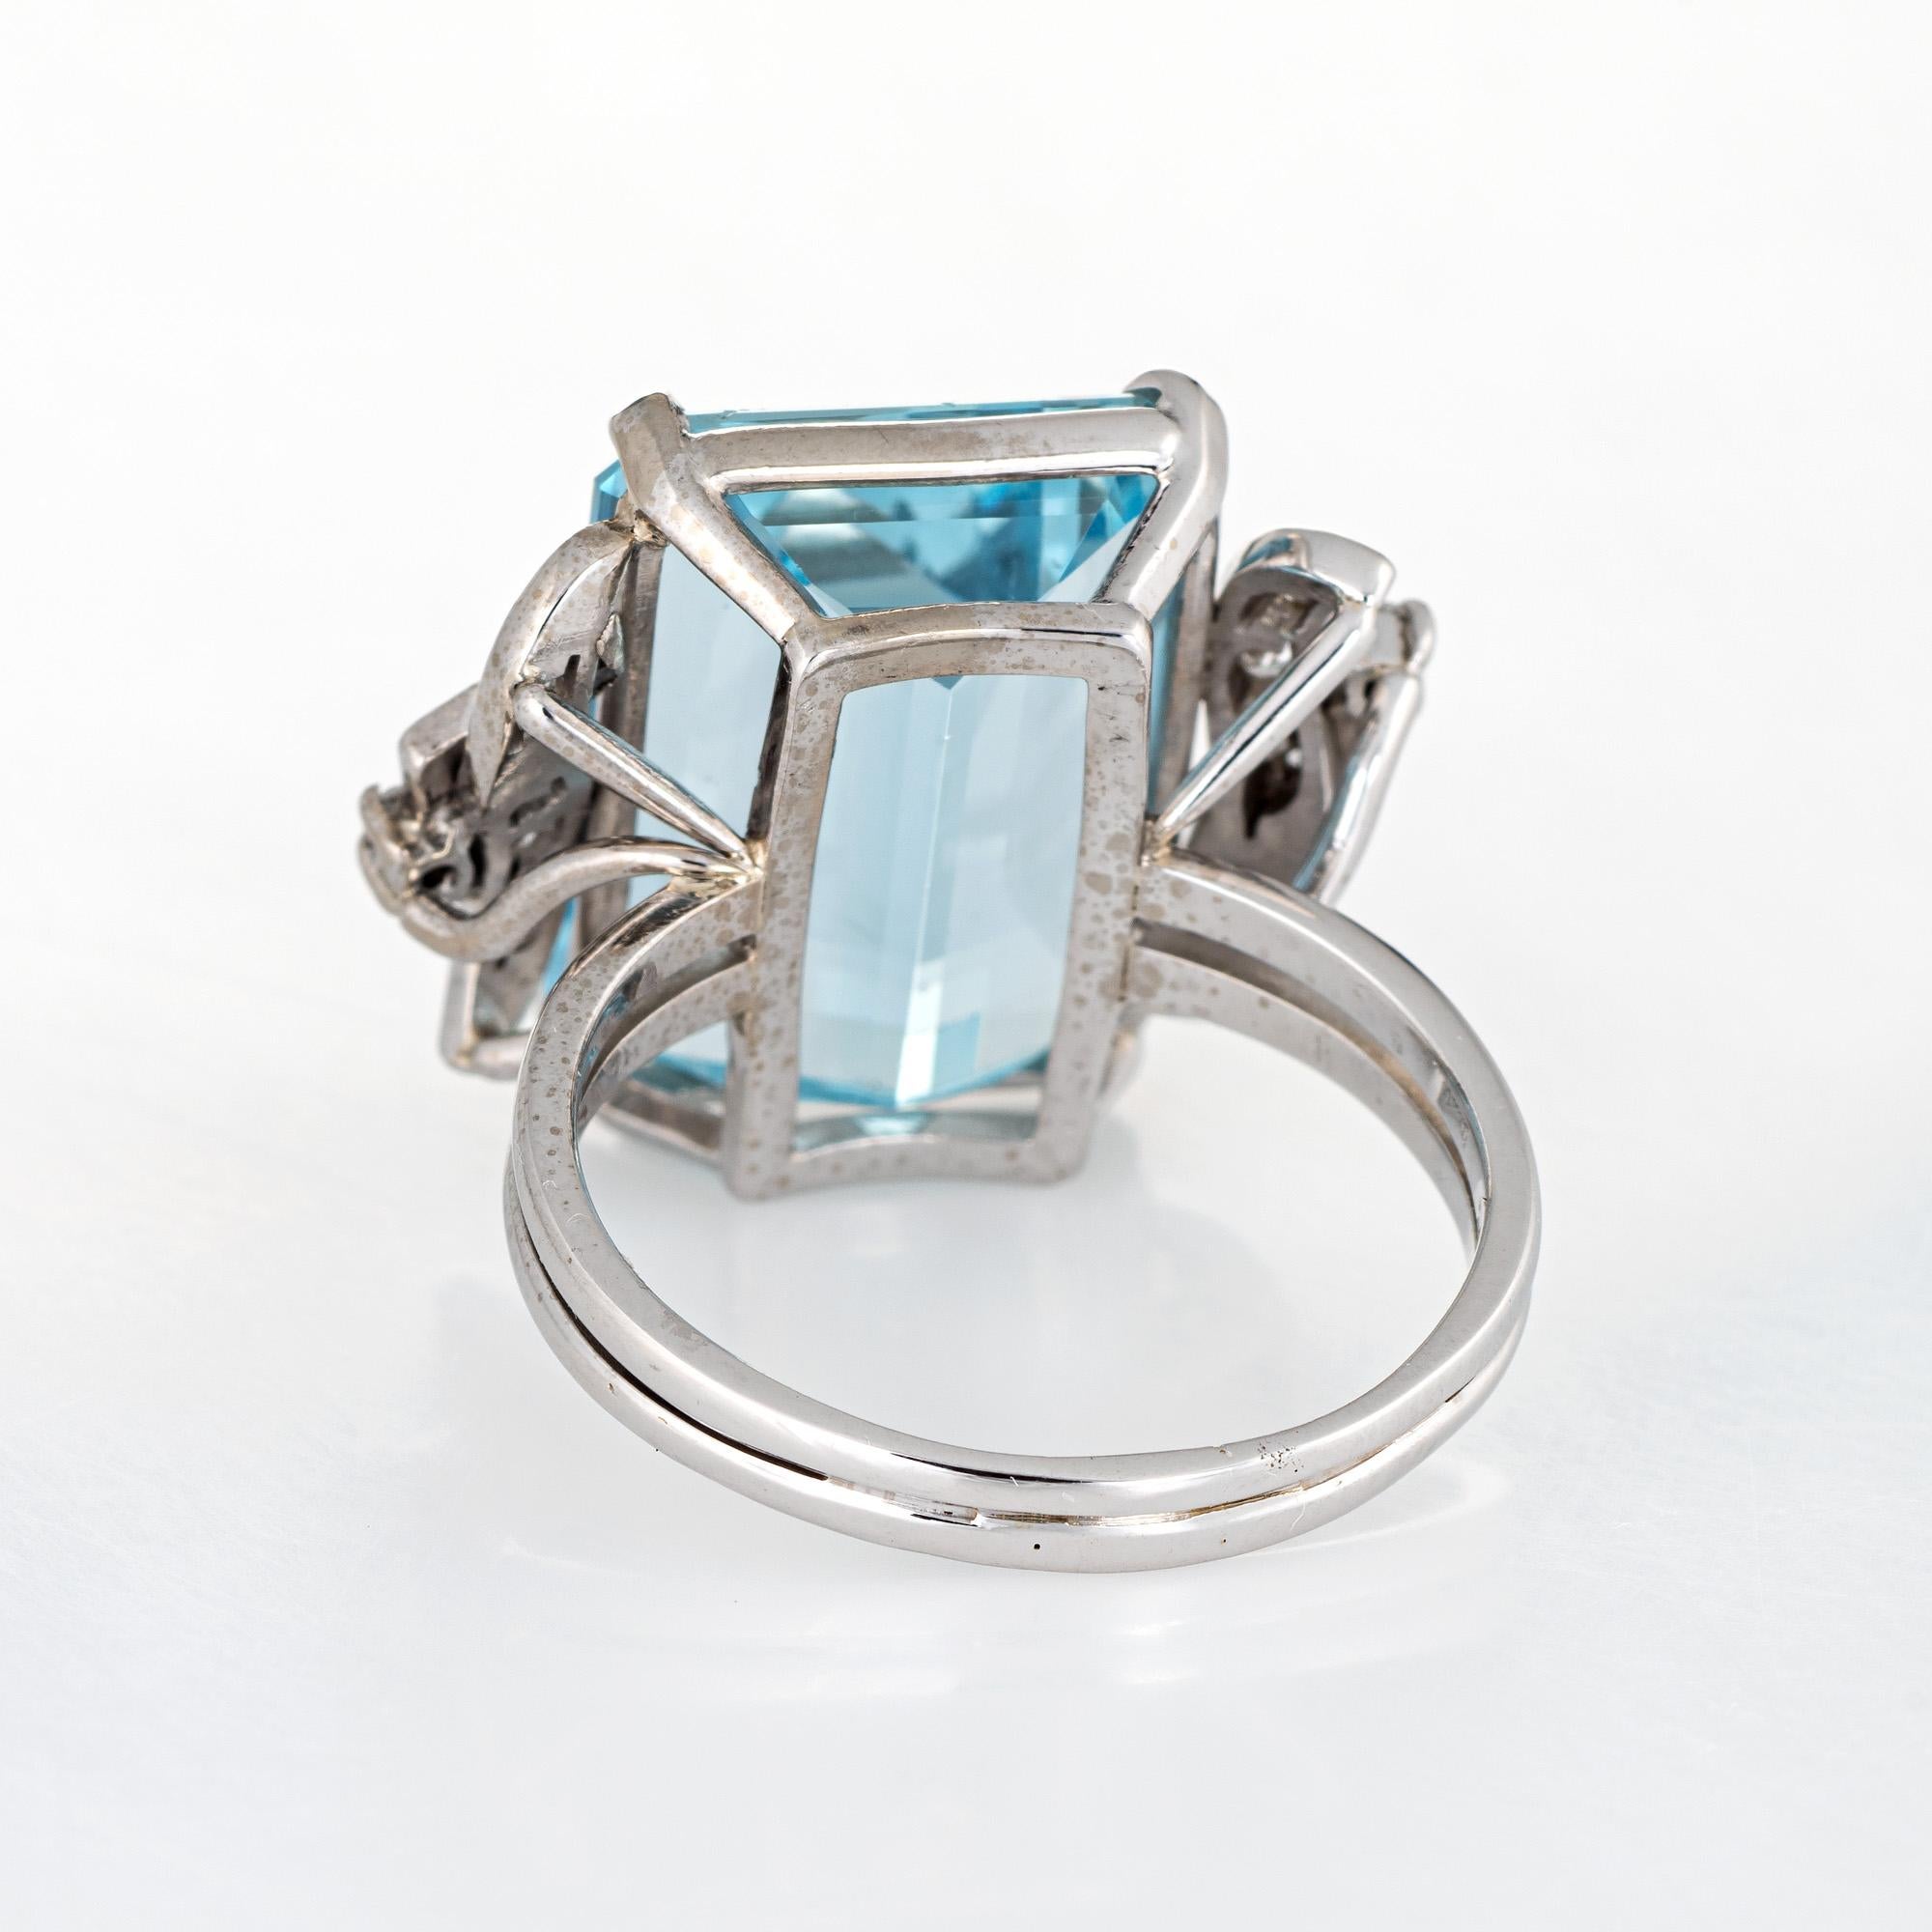 Emerald Cut 12 Carat Aquamarine Diamond Ring Vintage 18k White Gold Fine Cocktail Jewelry